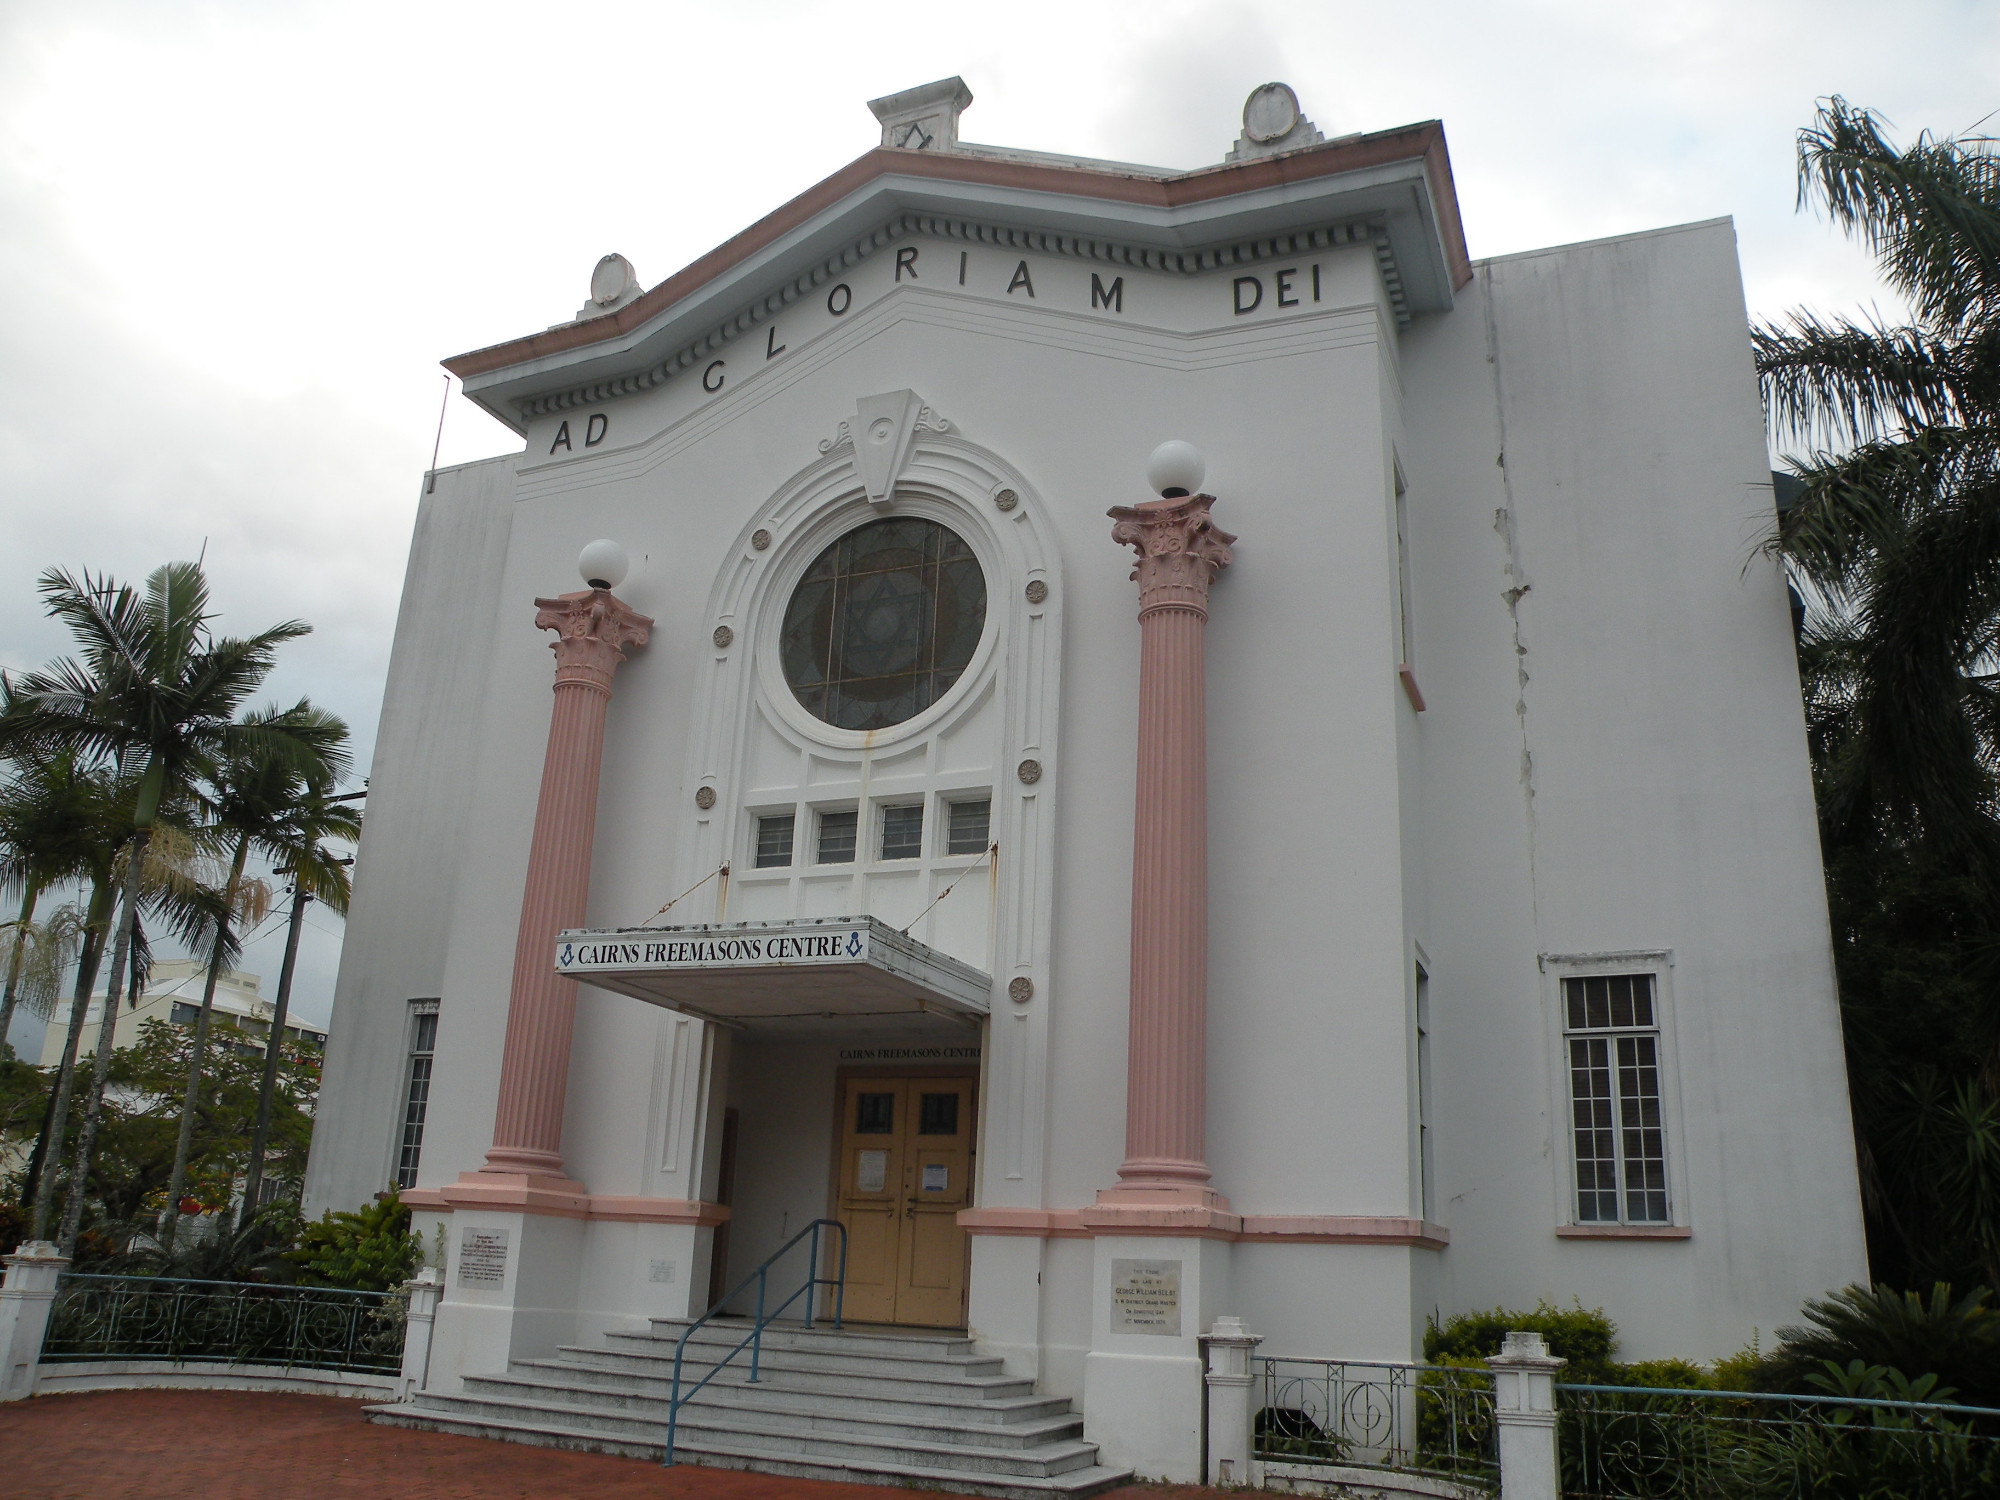 Cairns Masonic Temple<br/>
Masonic center